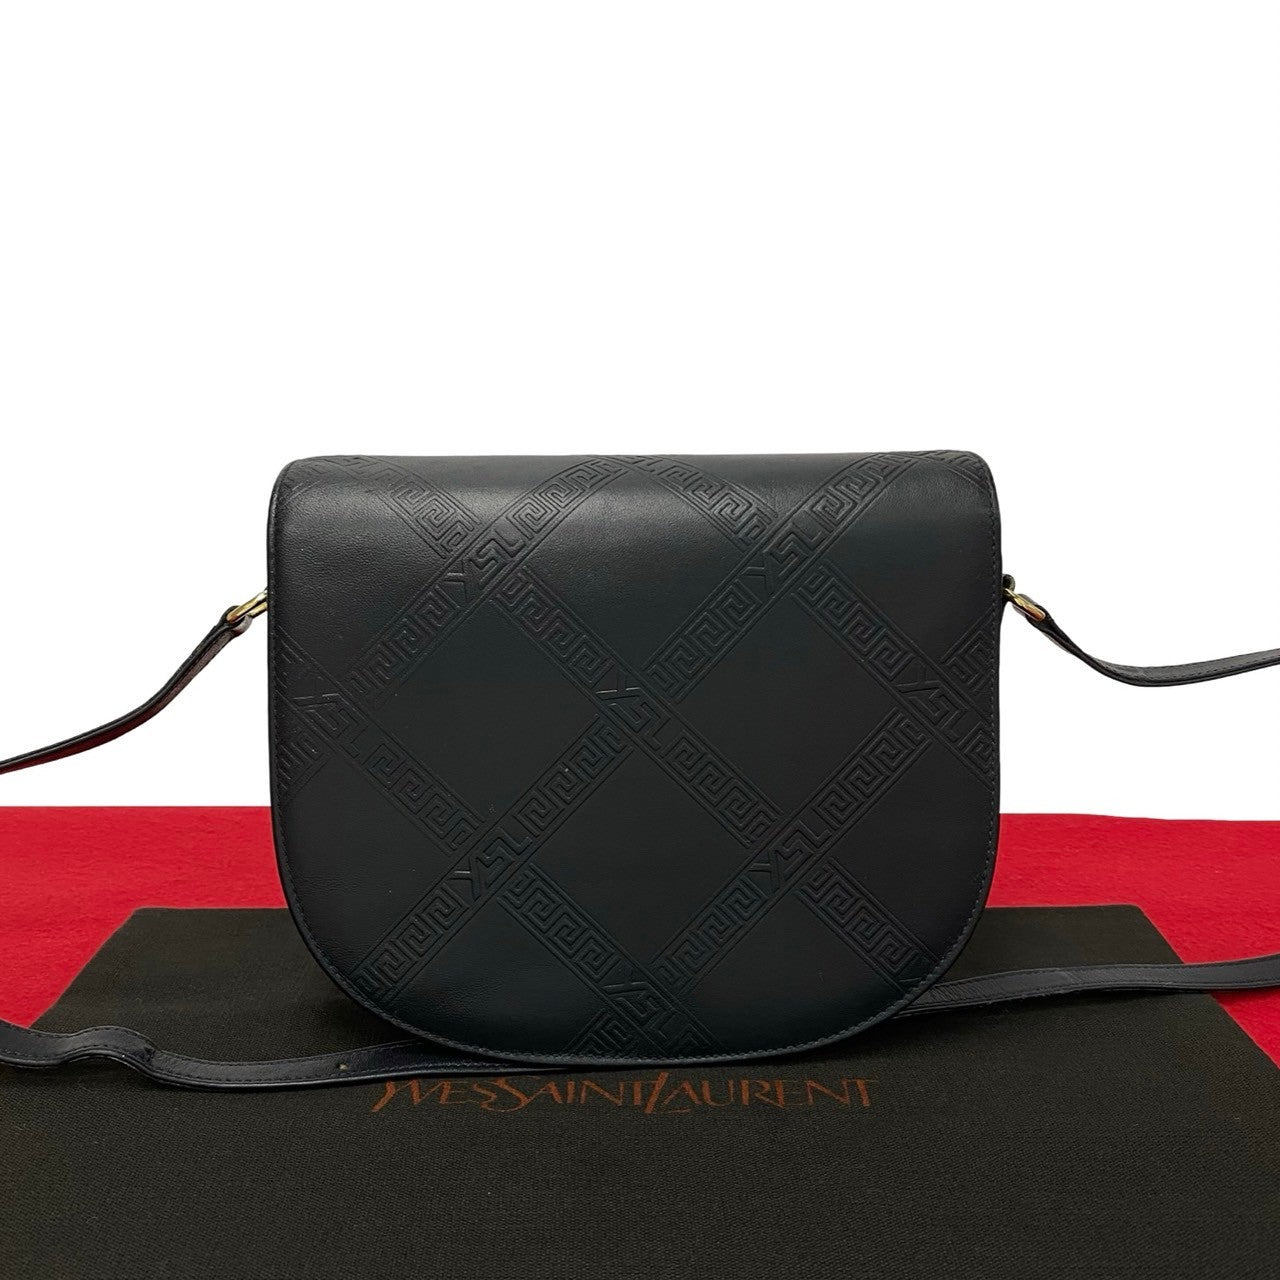 Yves Saint Laurent Embossed Leather Crossbody Bag Leather Crossbody Bag in Good condition